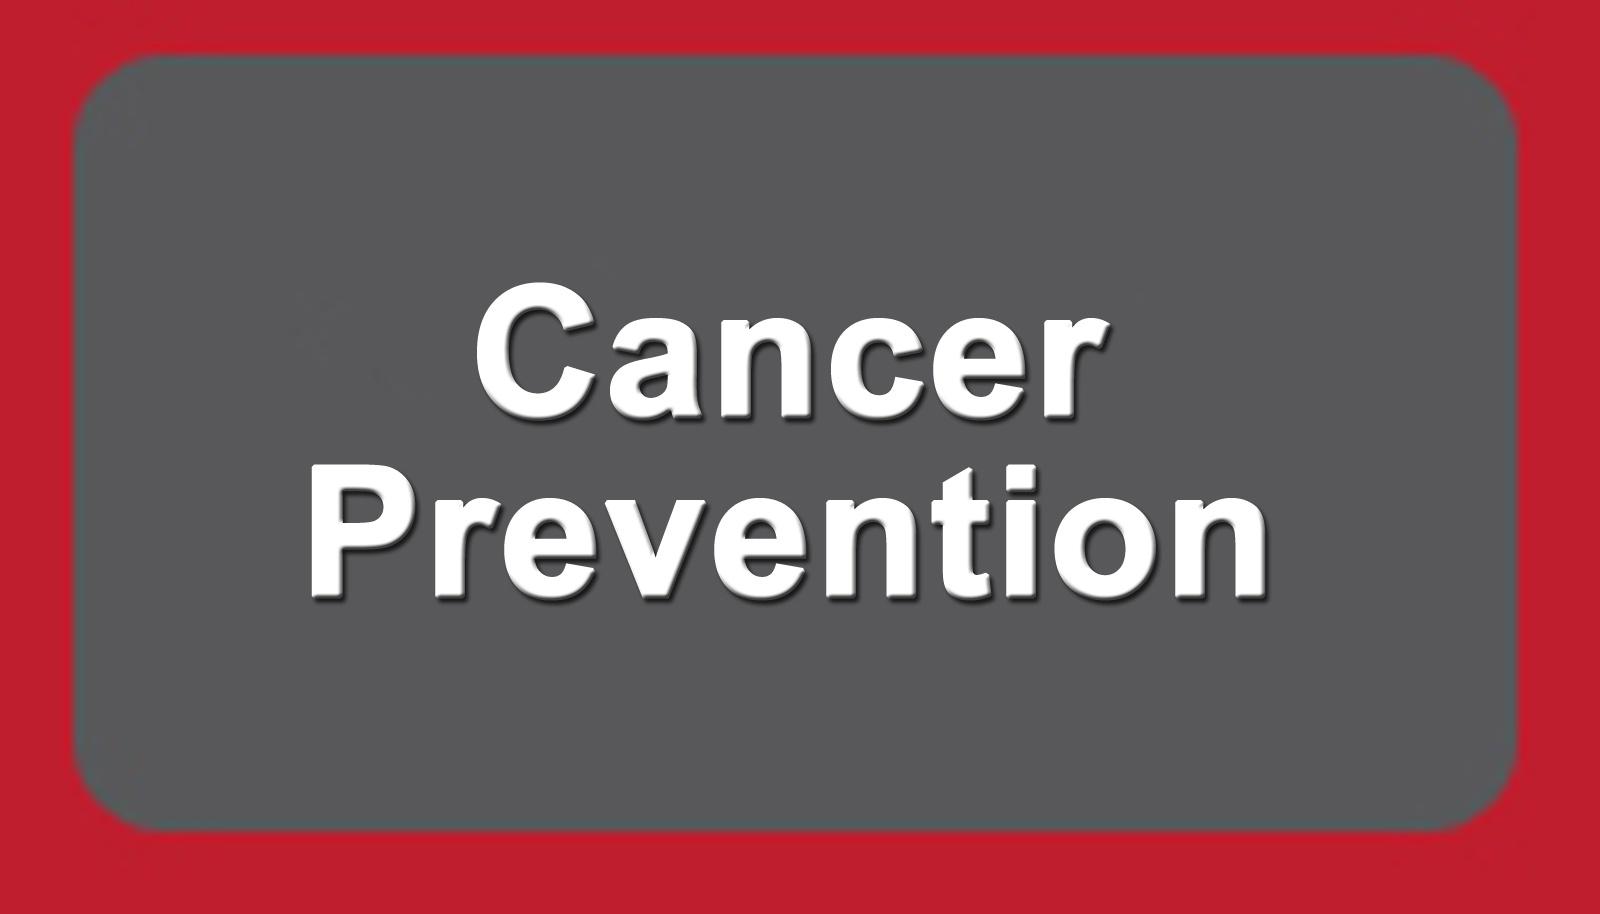 Menu selection_ Cancer Prevention